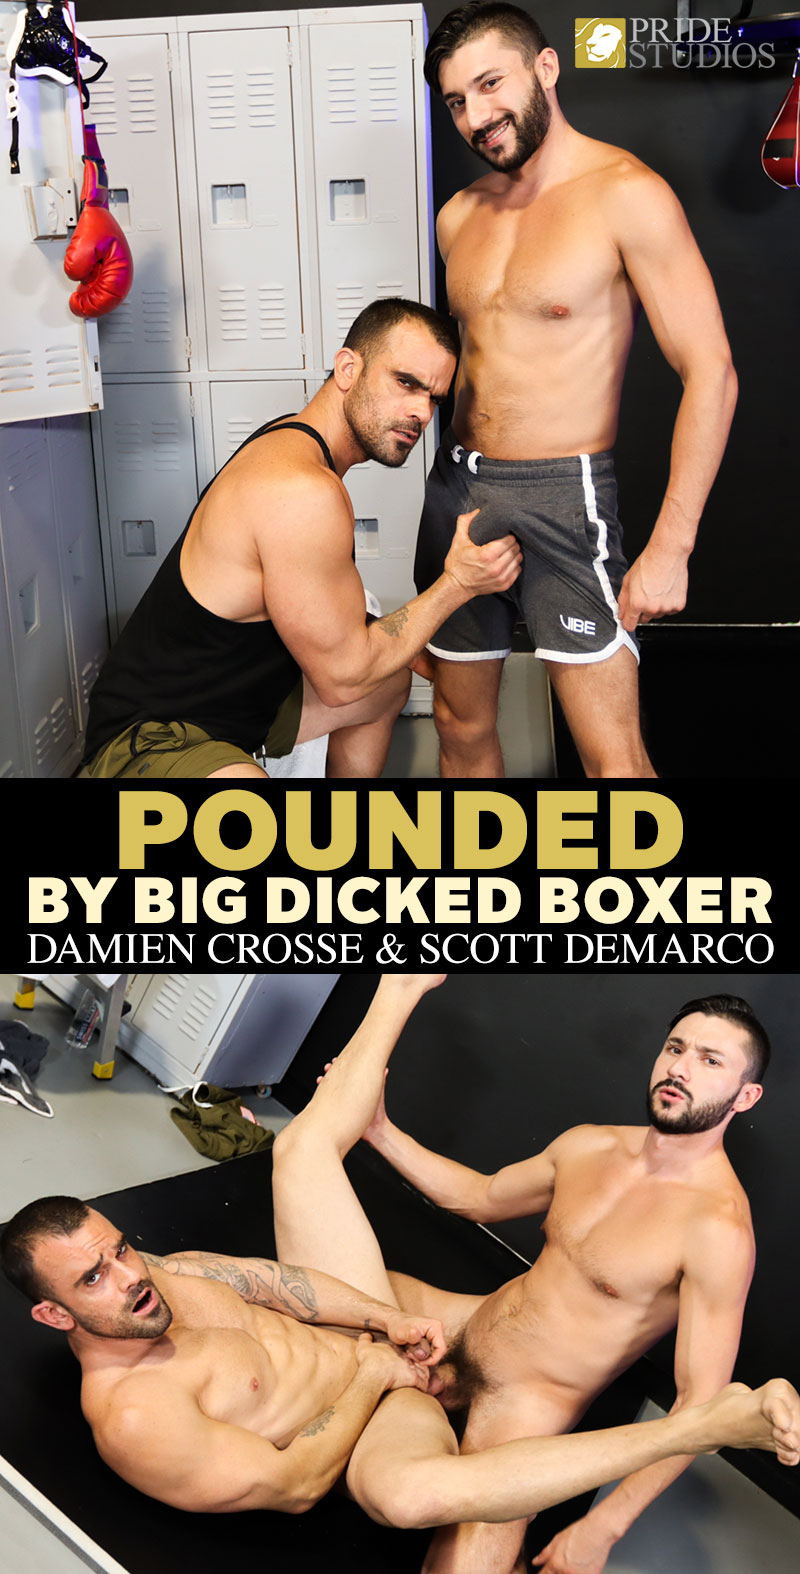 Pride Studios: Scott DeMarco barebacks Damien Crosse in "Pounded by Big Dicked Boxer"